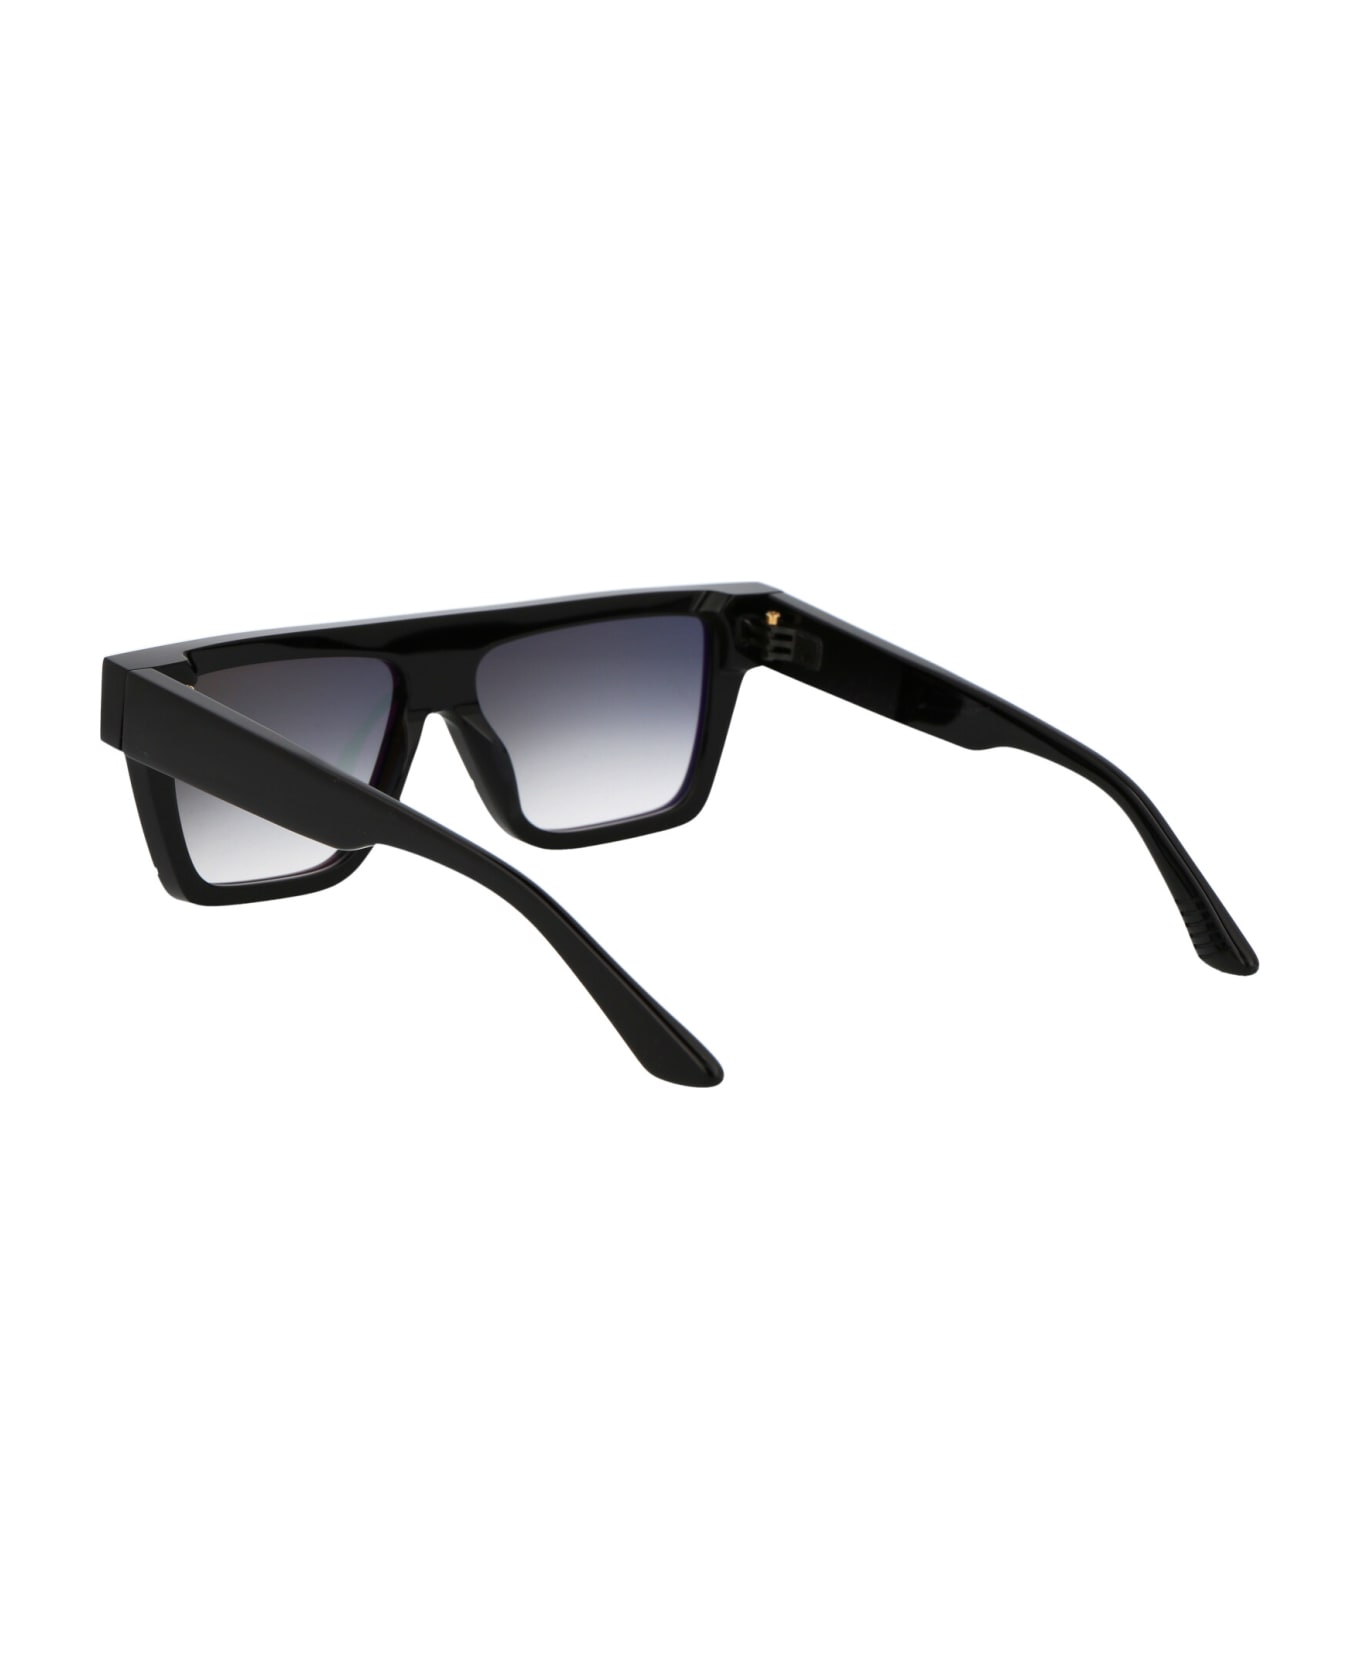 Yohji Yamamoto Slook 002 Sunglasses - A001 PURE BLACK/JAPAN GOLD サングラス